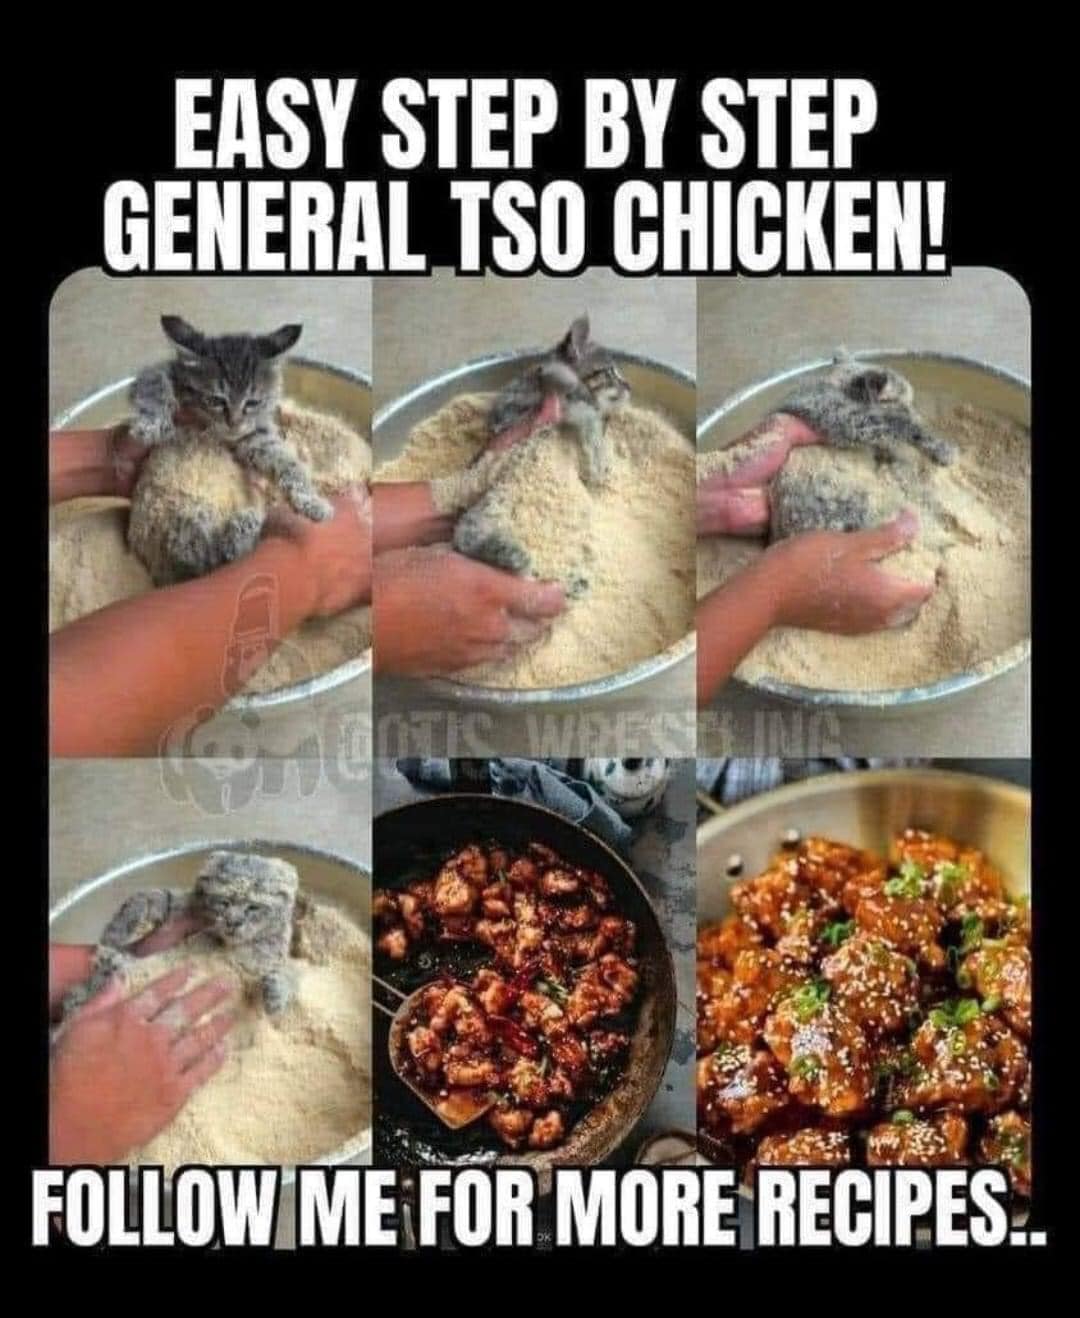 A Picture Recipe for General Tso's Chicken